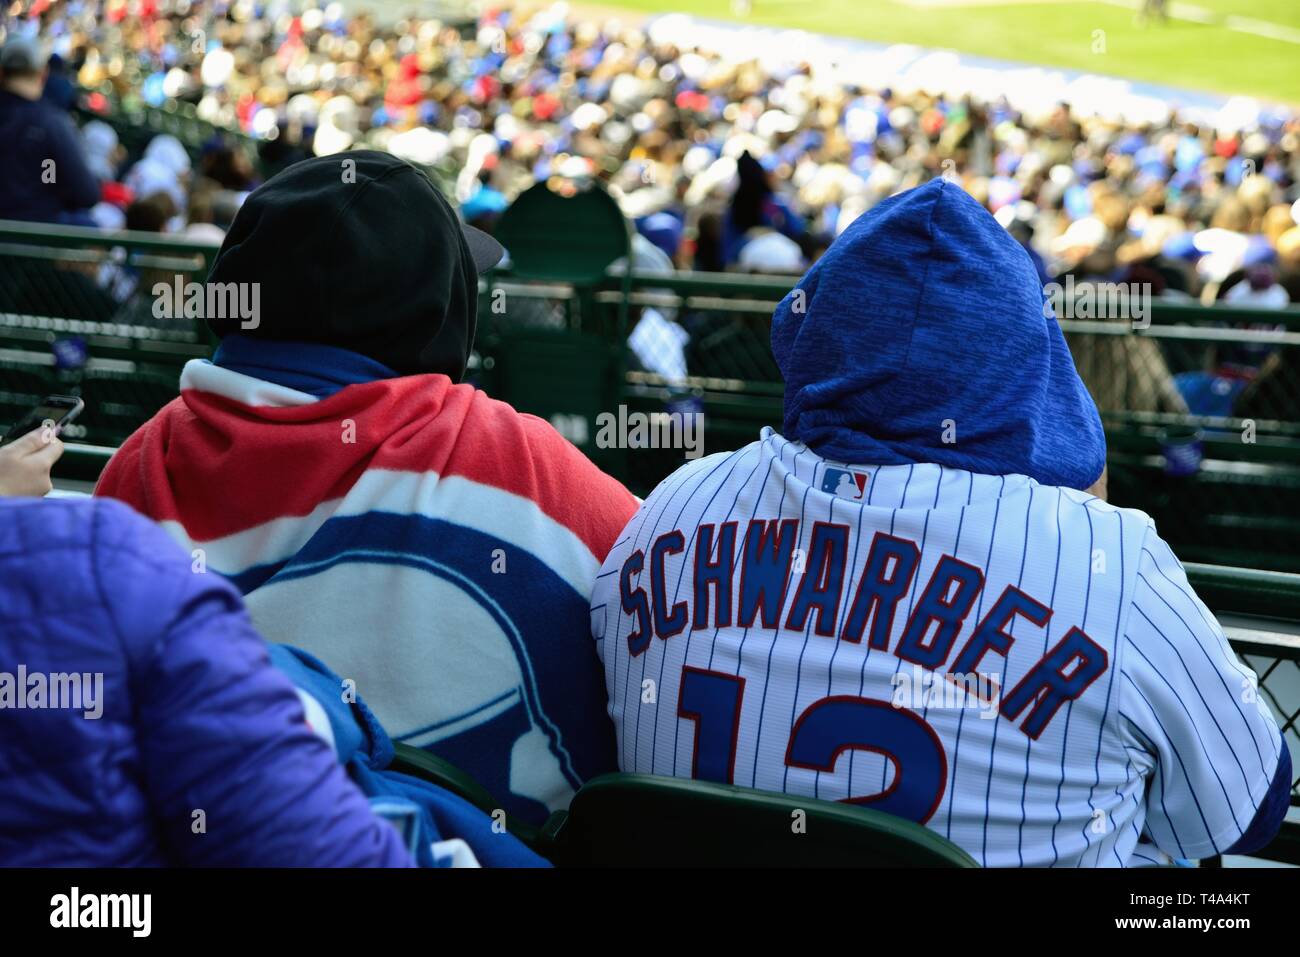 Cubs Fans Vs White Sox Fans  Cubs fan, Cubs baseball, Baseball memes